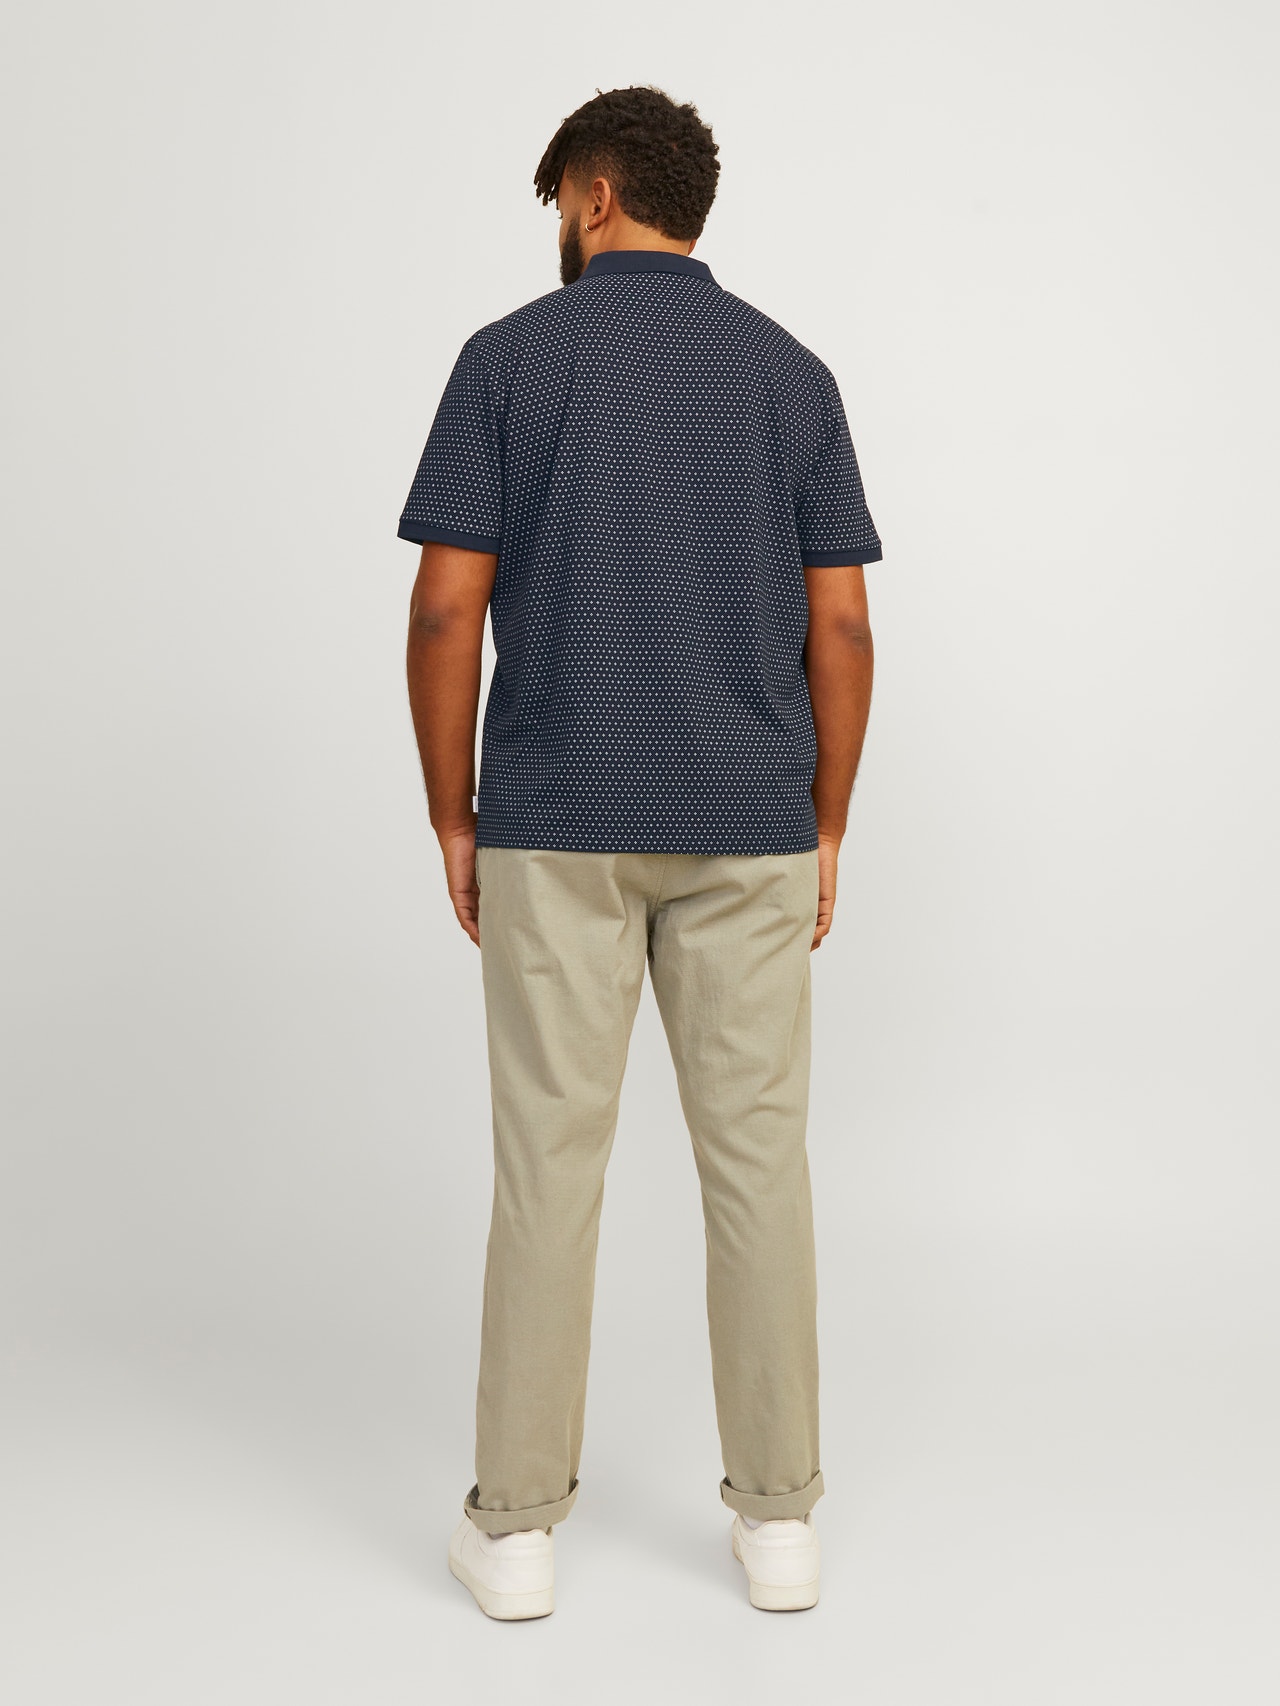 Jack & Jones Plus Size T-shirt Stampato -Navy Blazer - 12254901